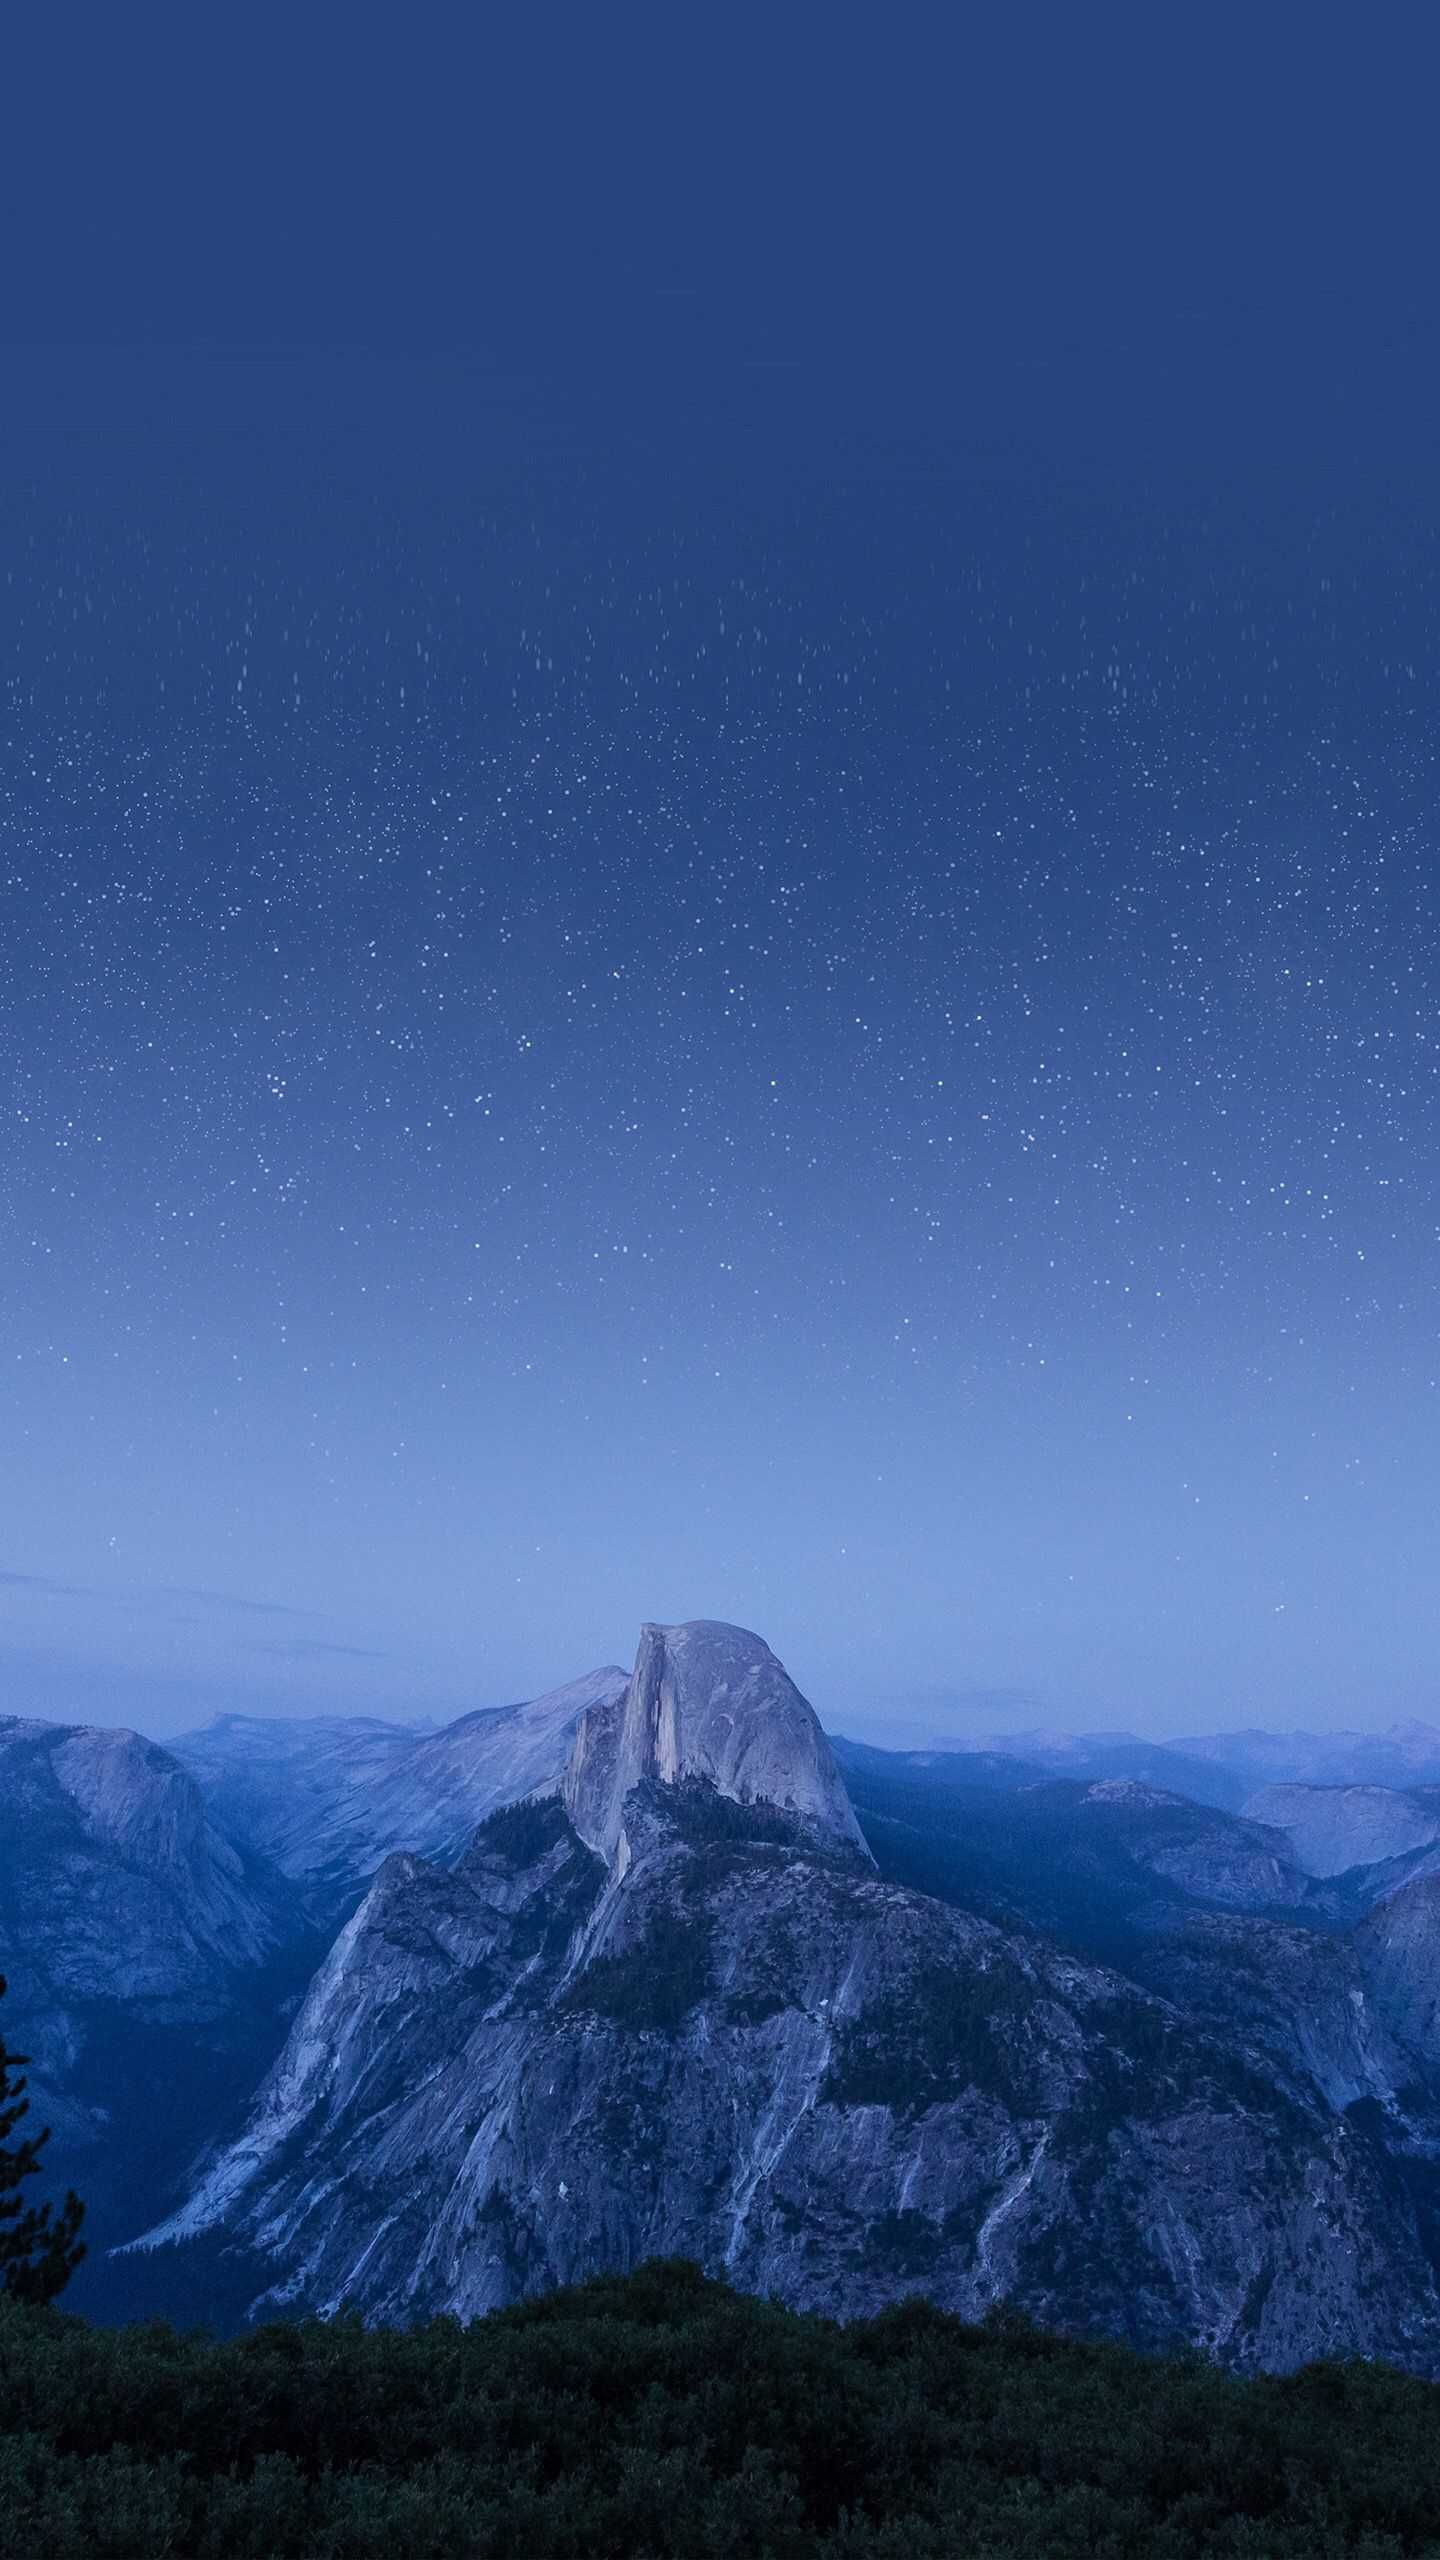 Yosemite Mountain Night Stars iPhone Wallpaper. Yosemite wallpaper, Yosemite mountains, Night sky stars